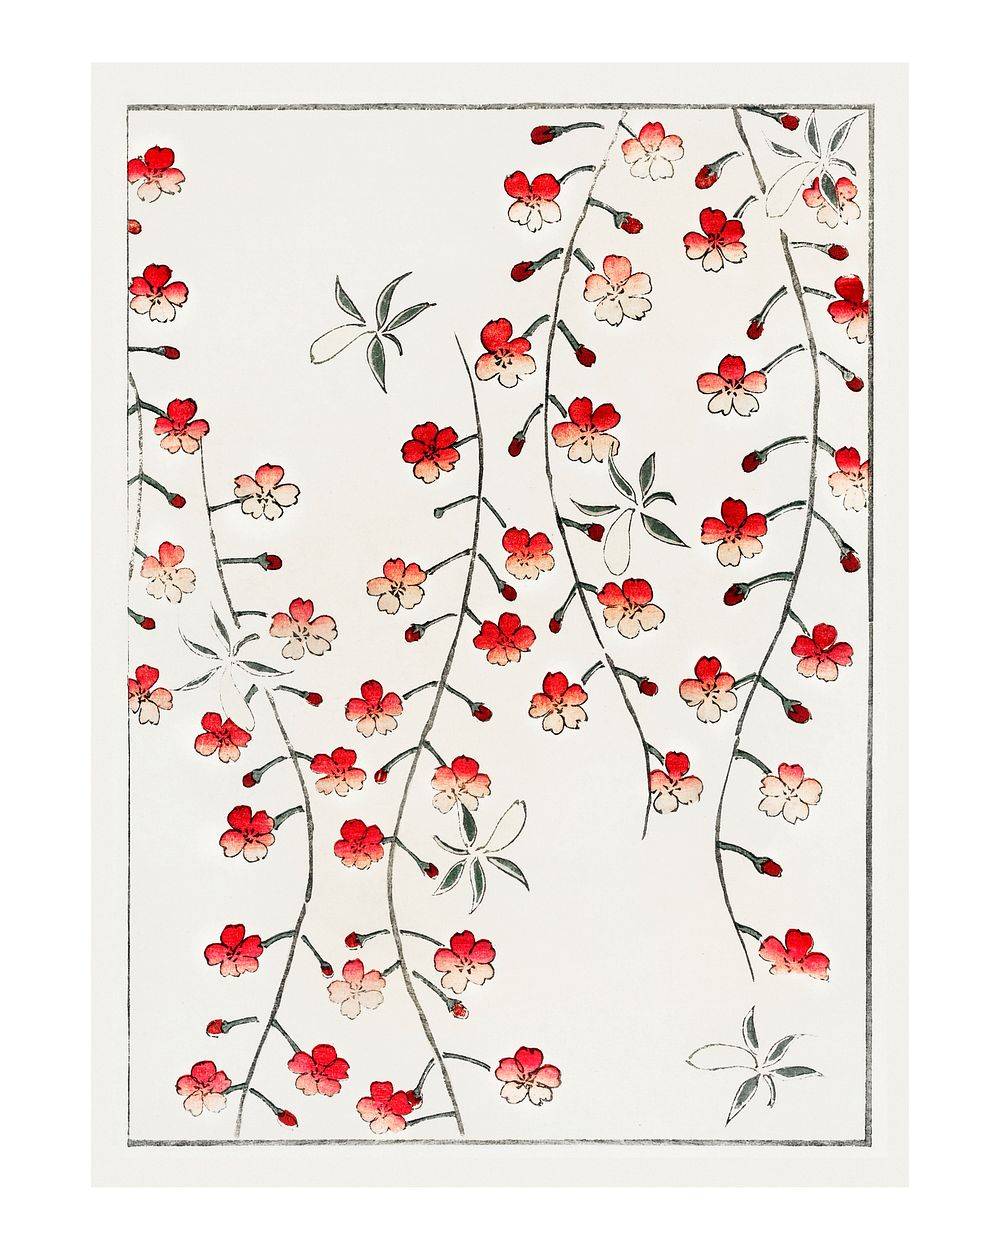 Cherry blossom vintage illustration from Bijutsu Sekai by Watanabe Seitei. Digitally enhanced by rawpixel.